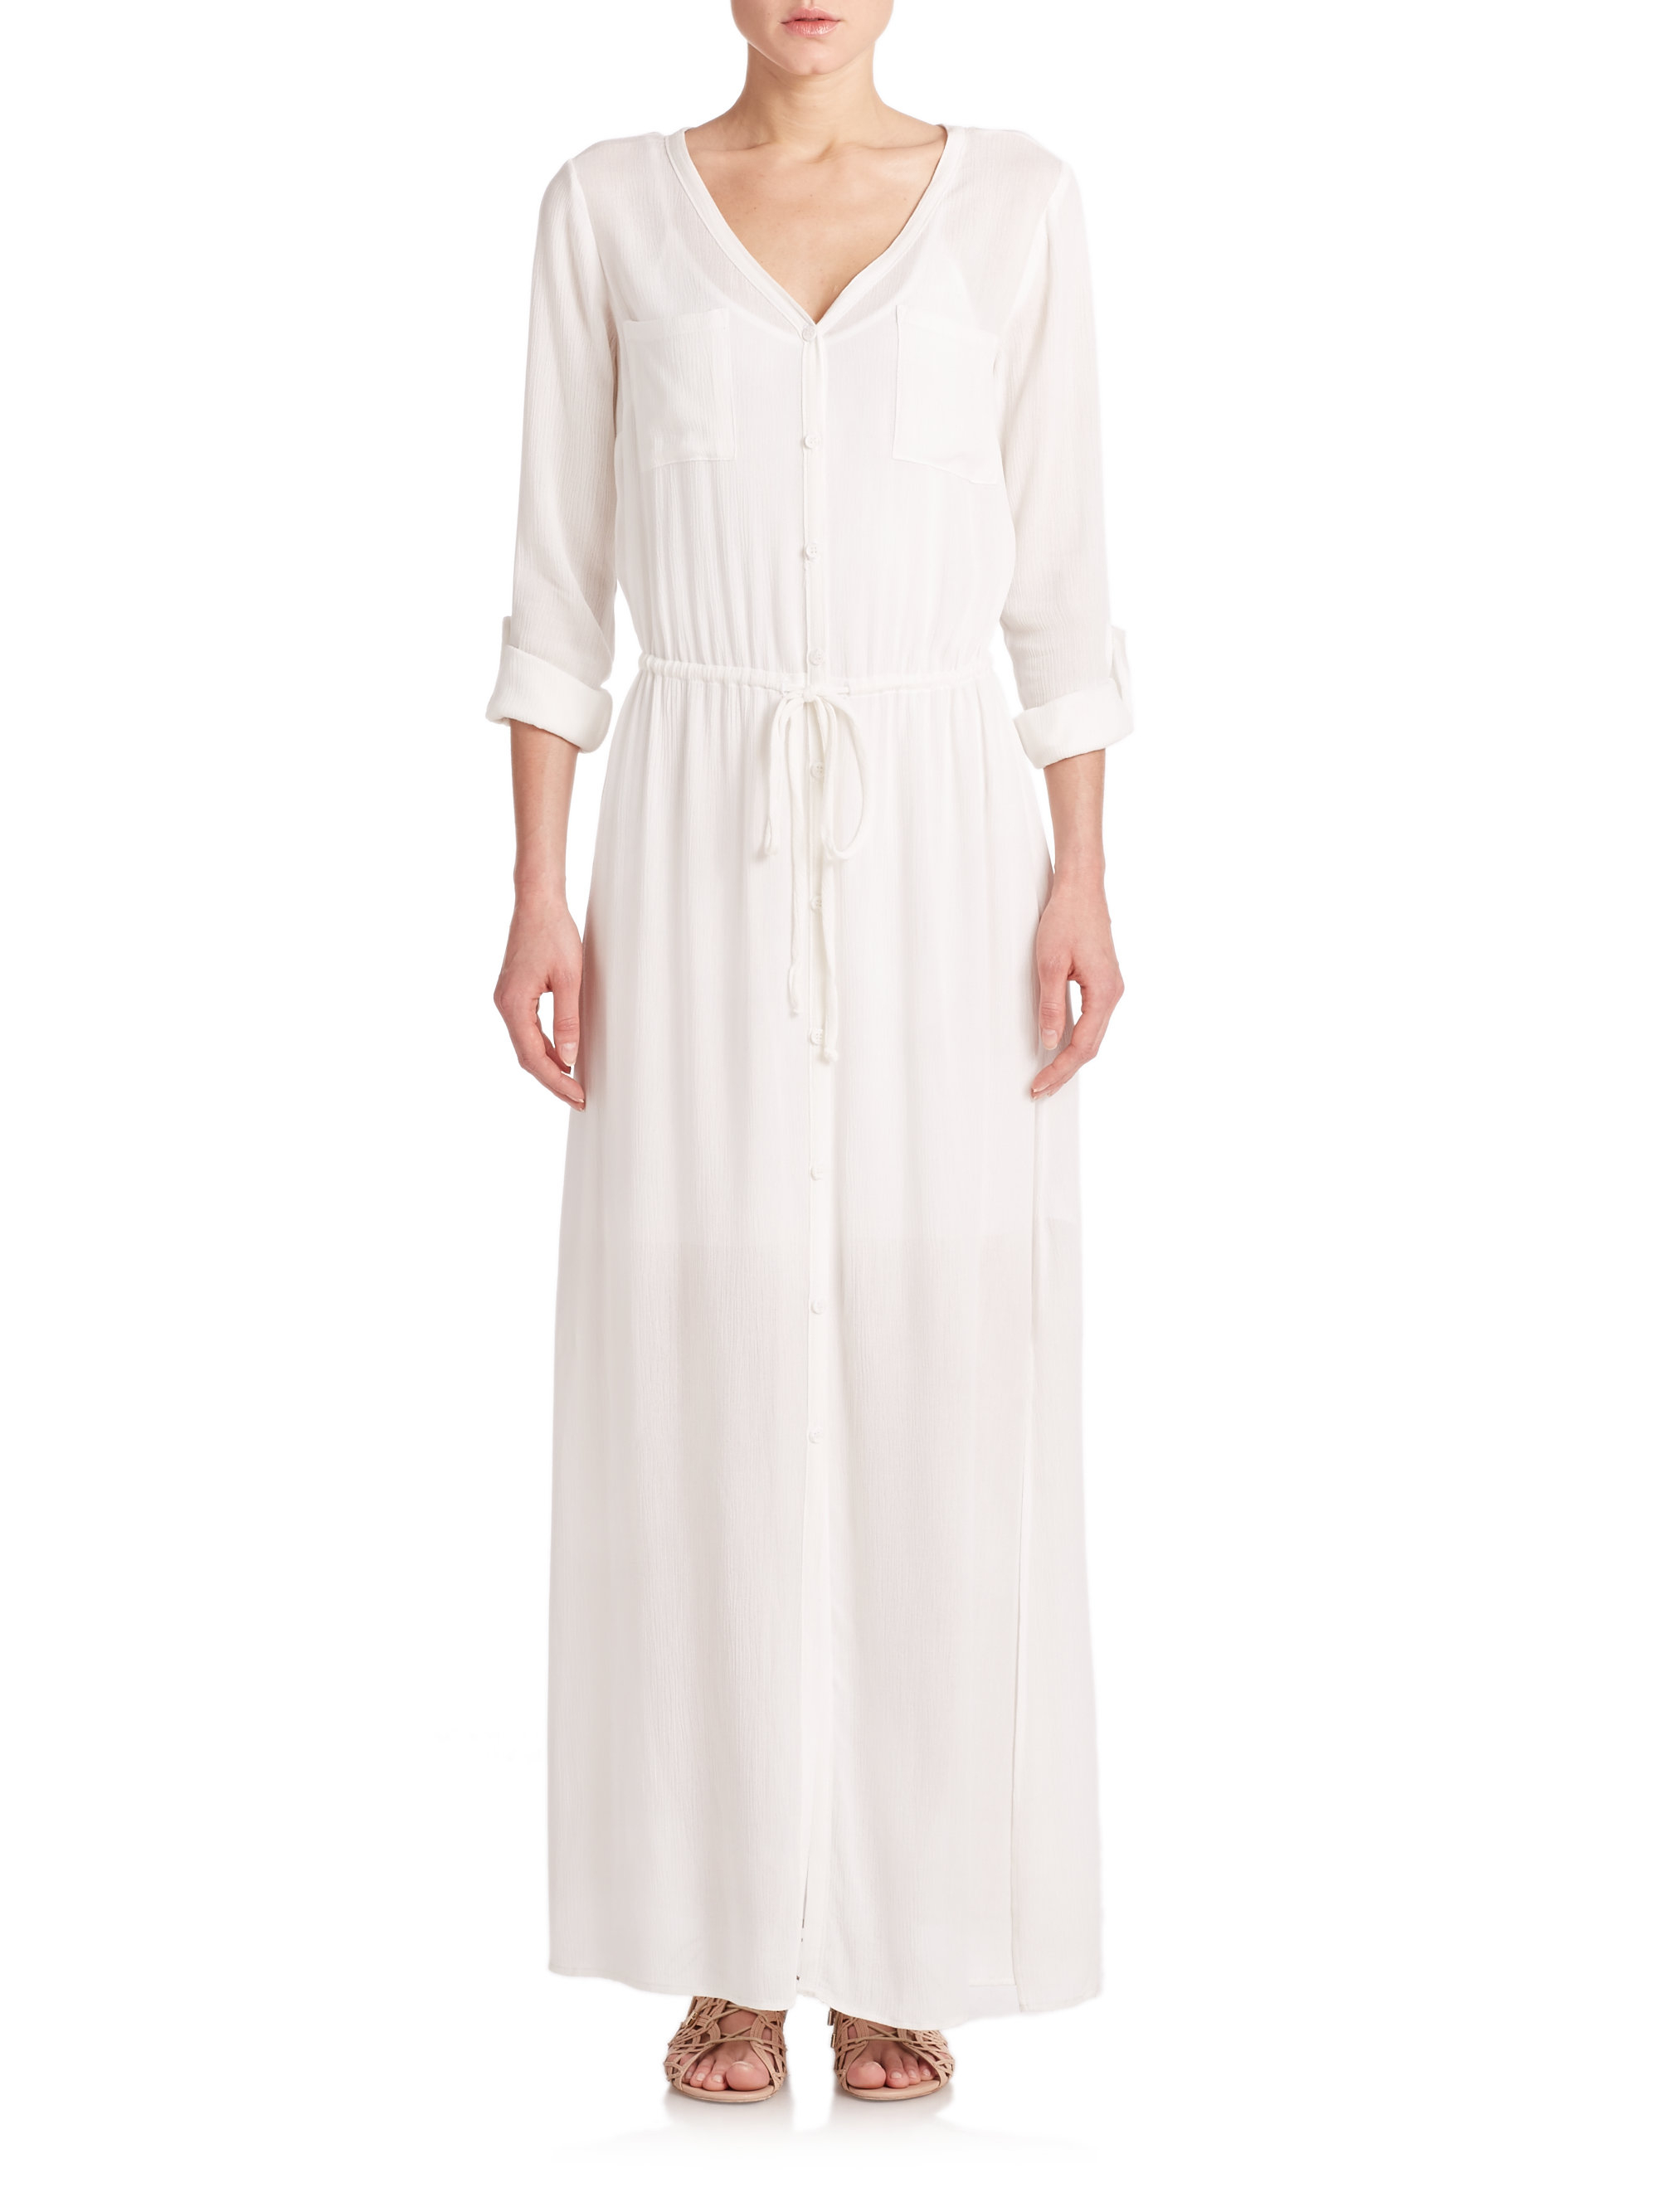 Splendid Button-front Maxi Dress in White | Lyst